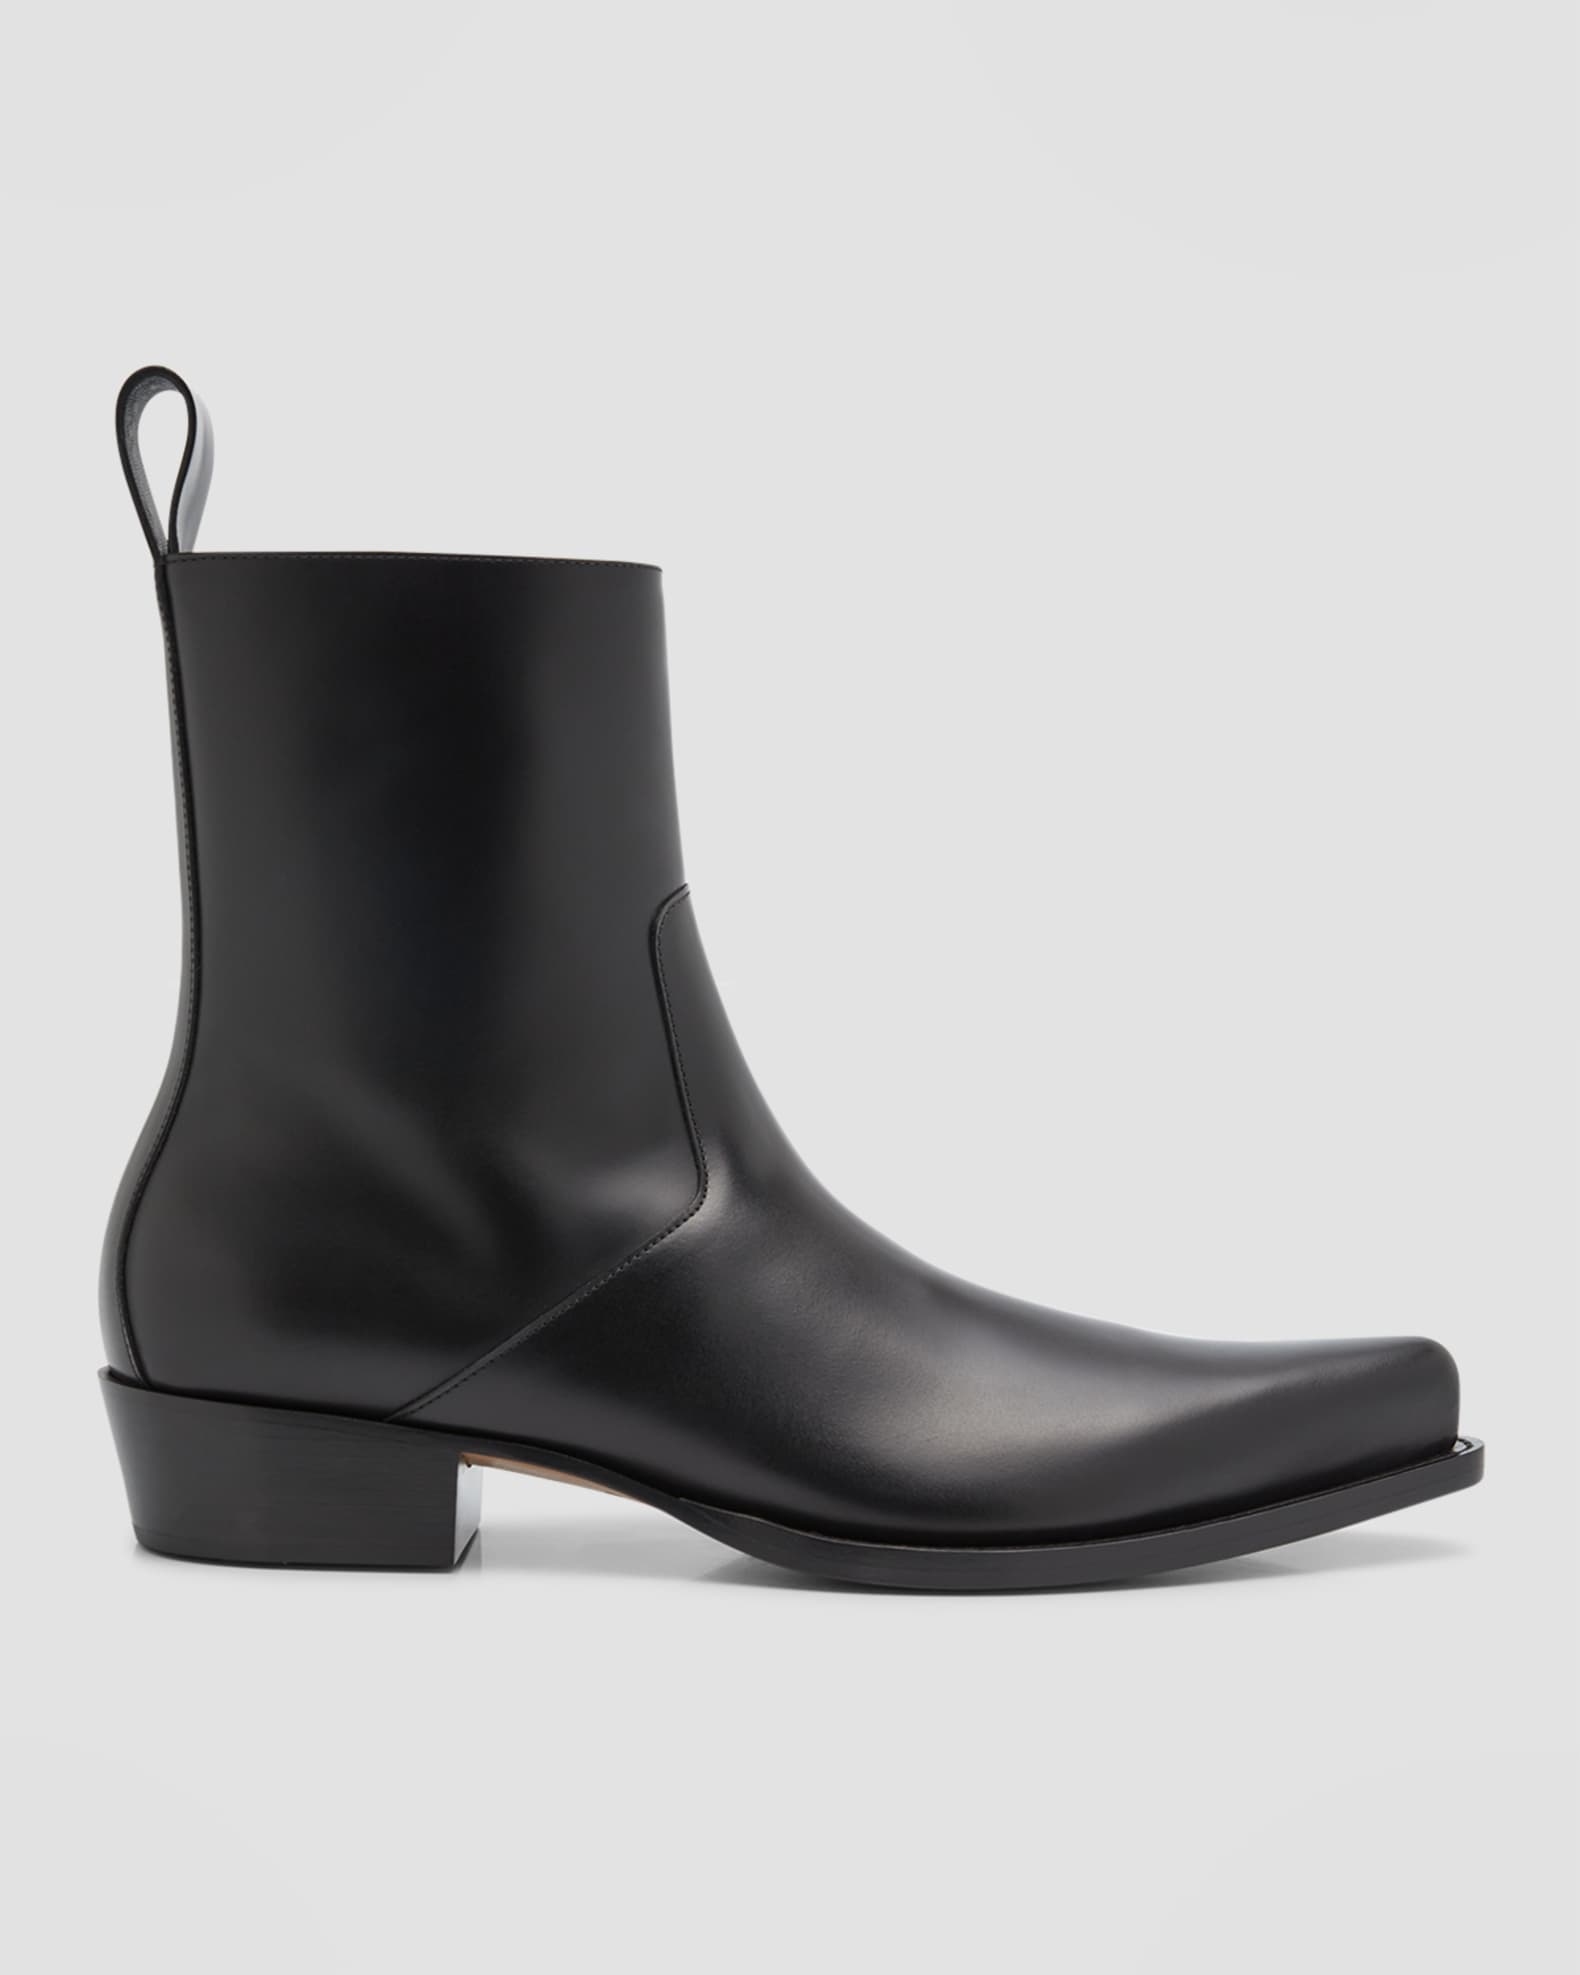 Bottega Veneta Men's Ripley Pointed Toe Leather Ankle Boots | Neiman Marcus